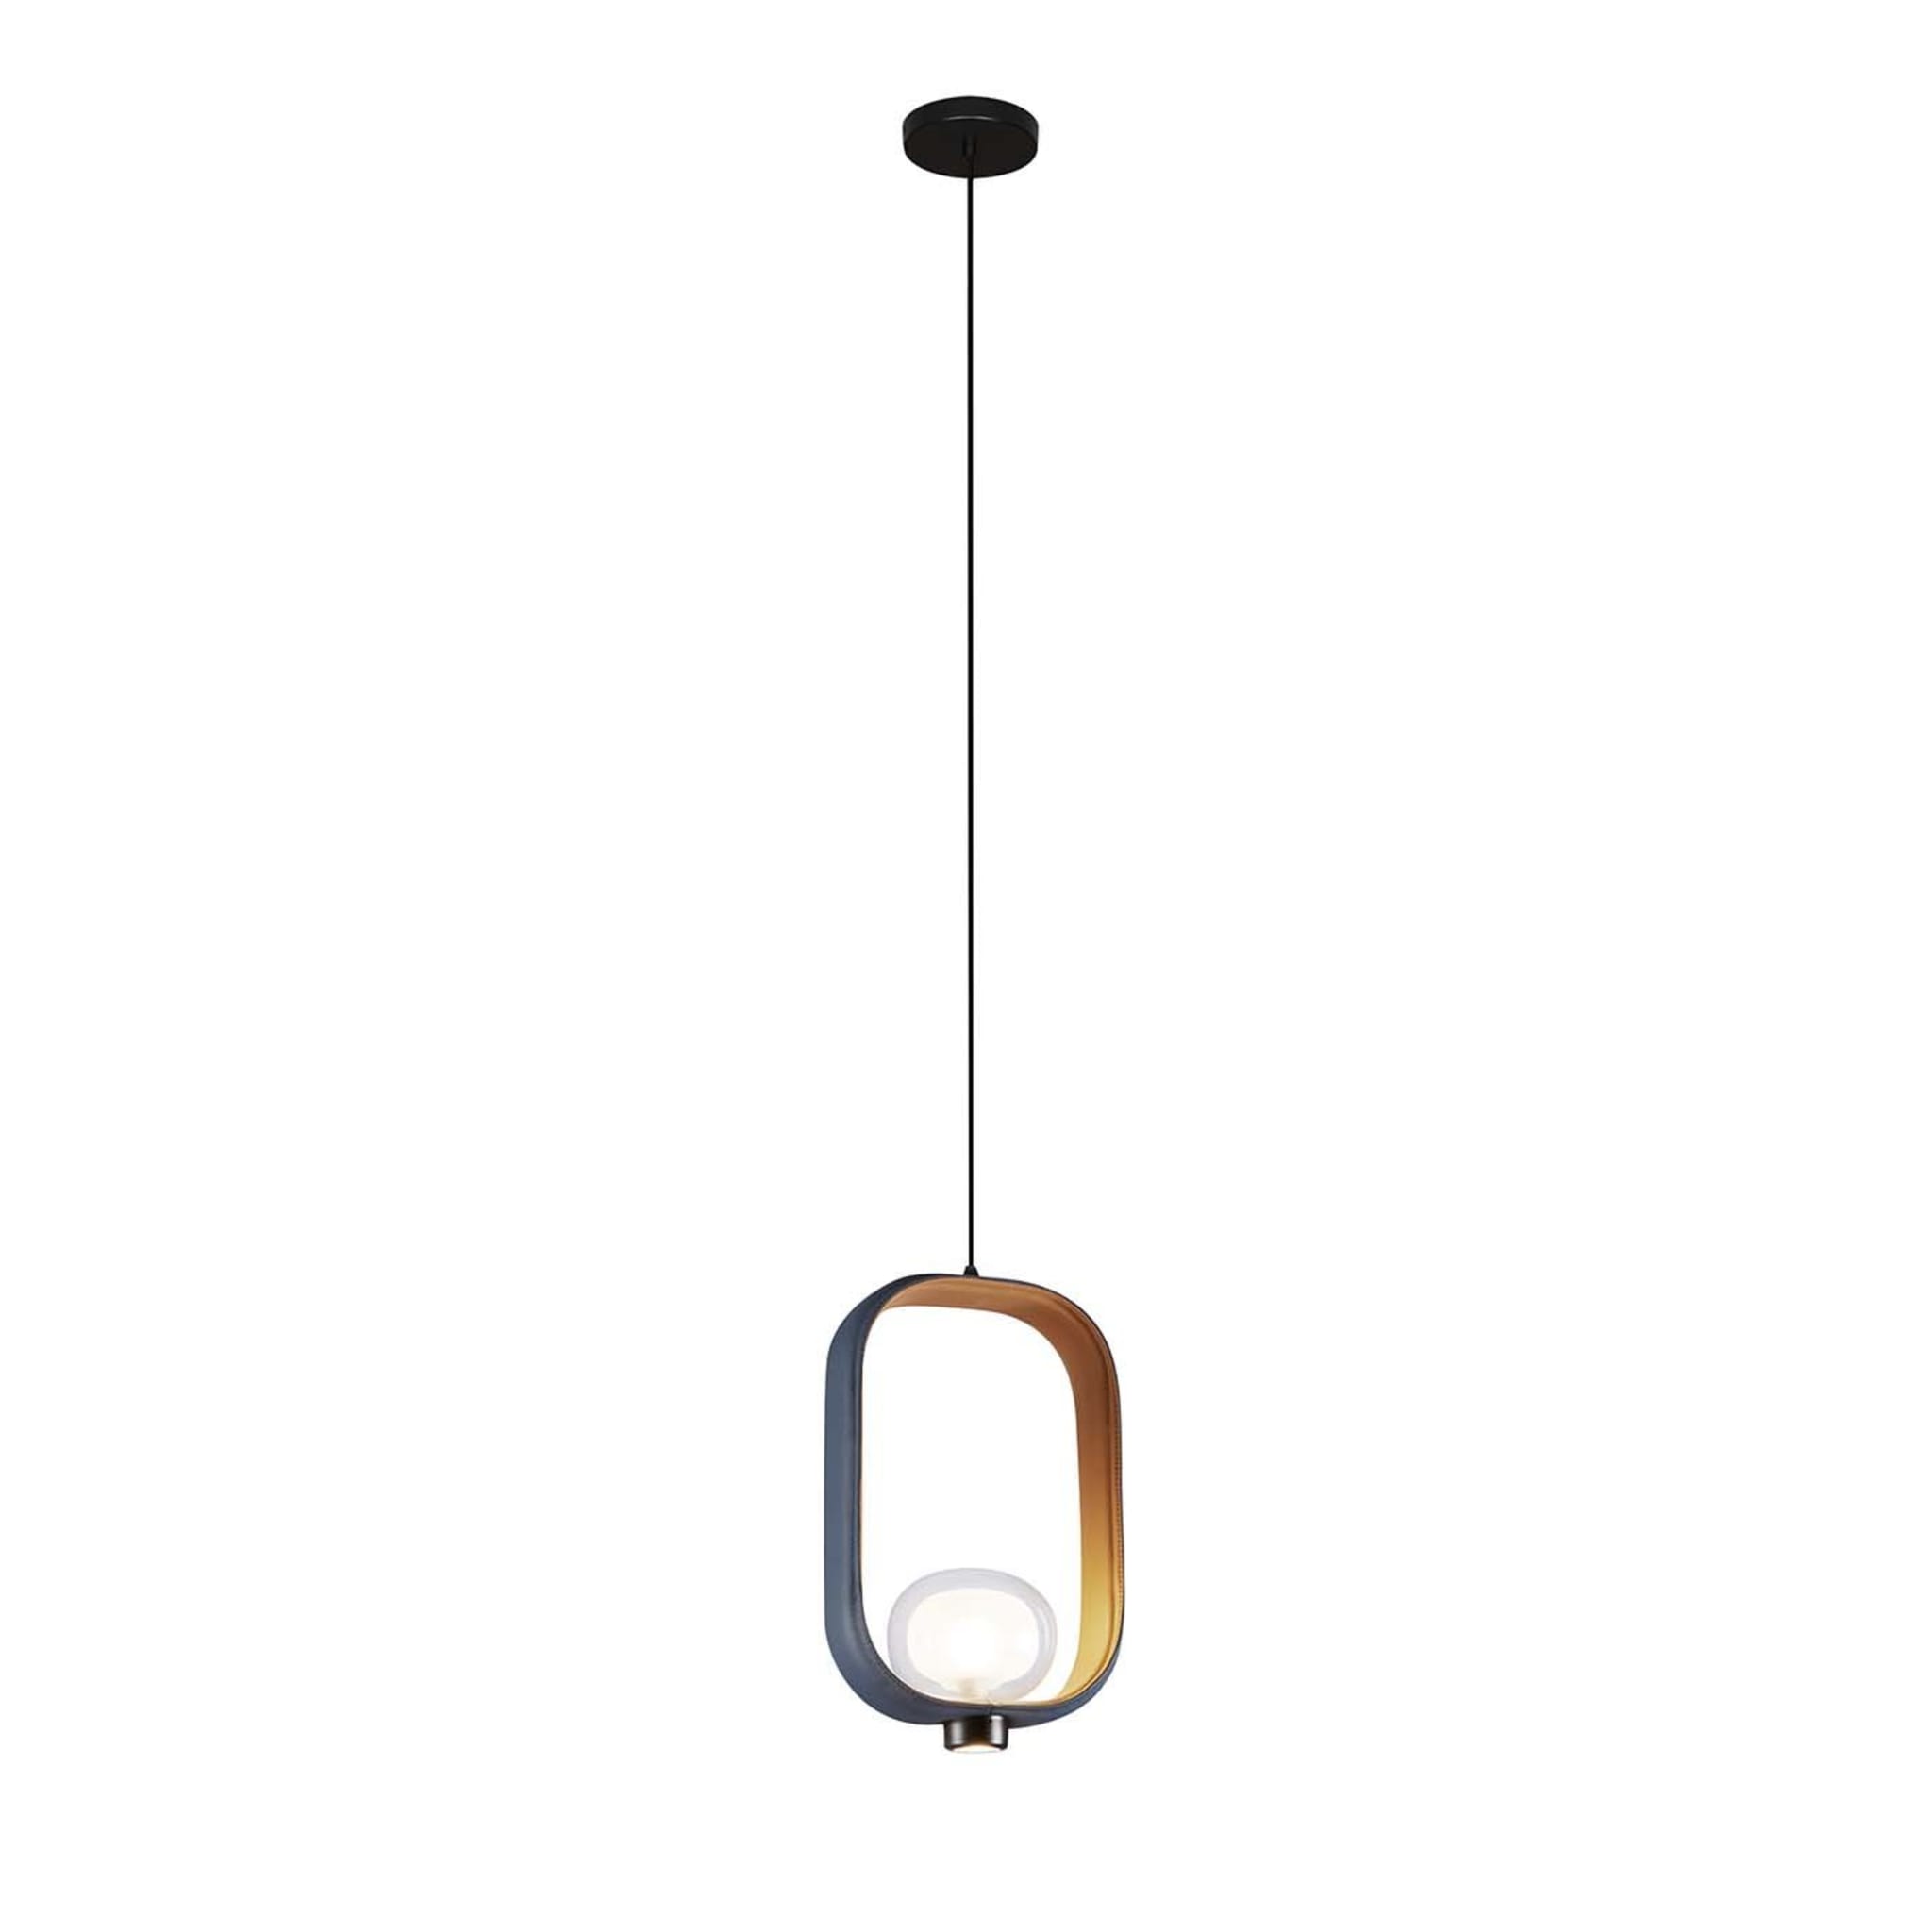 Filipa Leather Pendant Lamp by Corrado Dotti - Main view